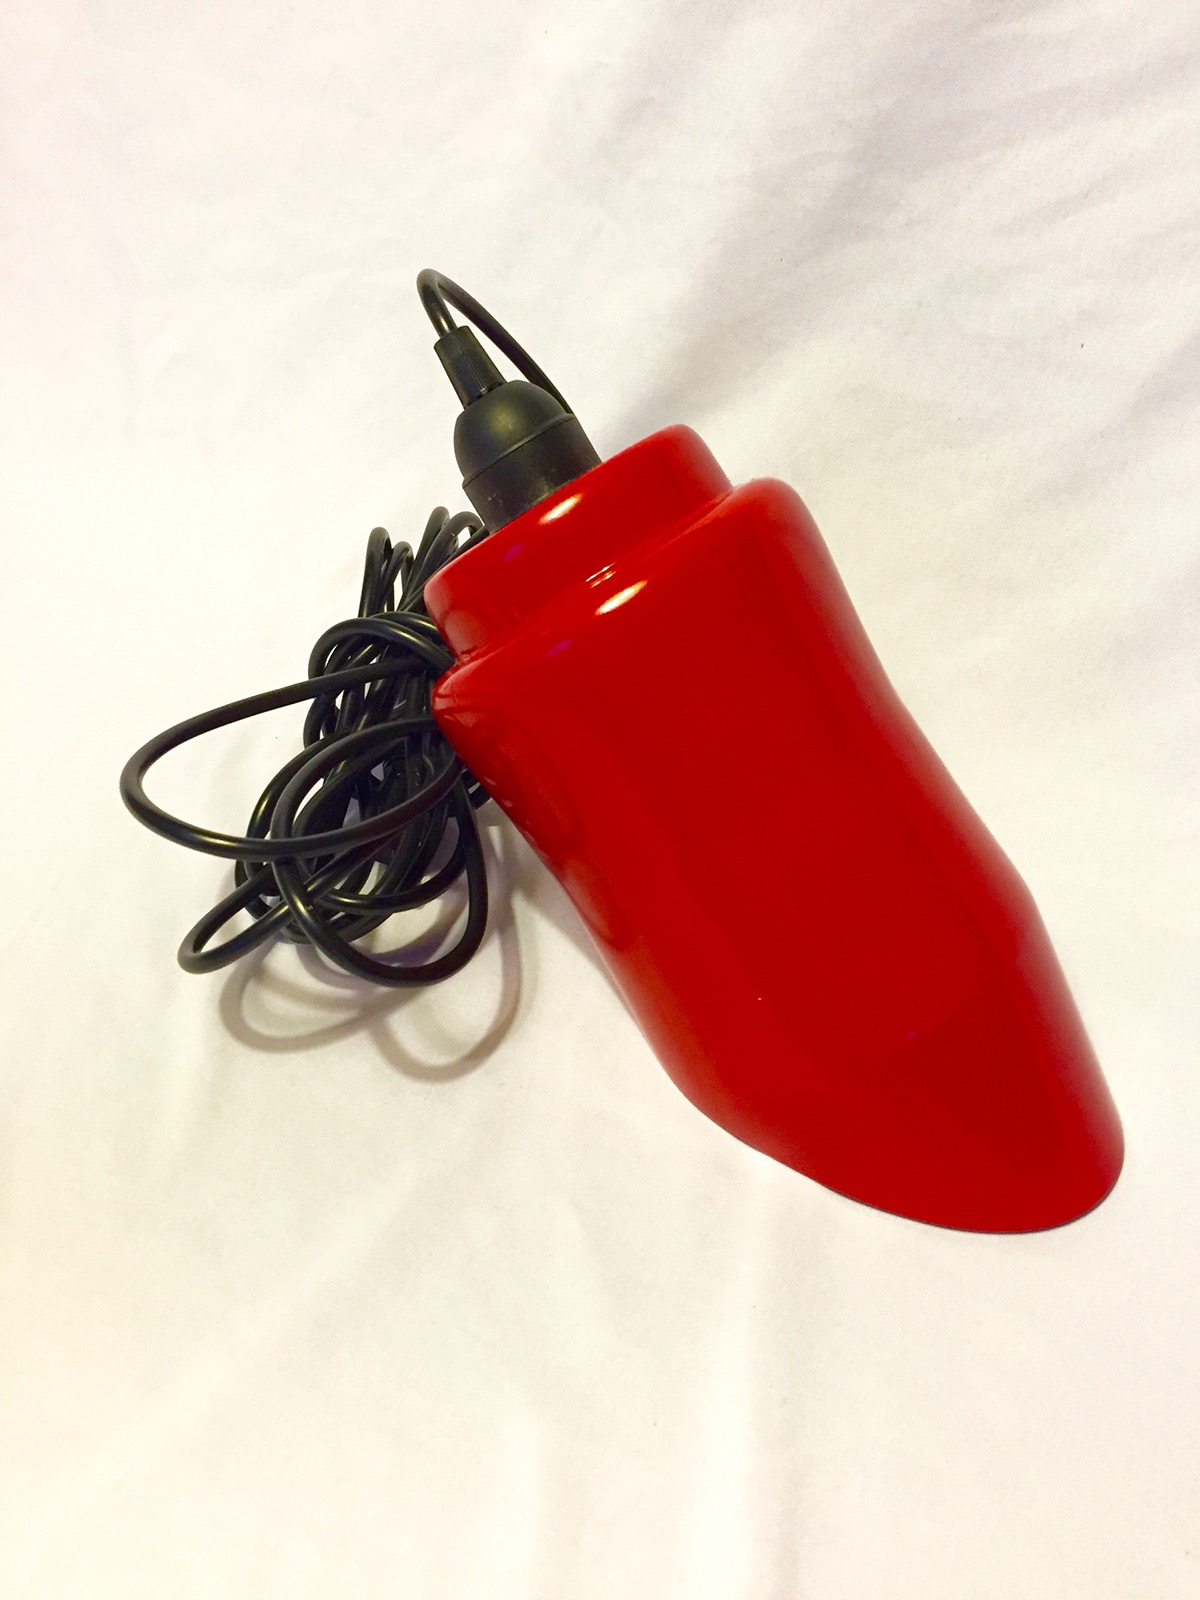 Lamp sanguine red vacuform polystyrene